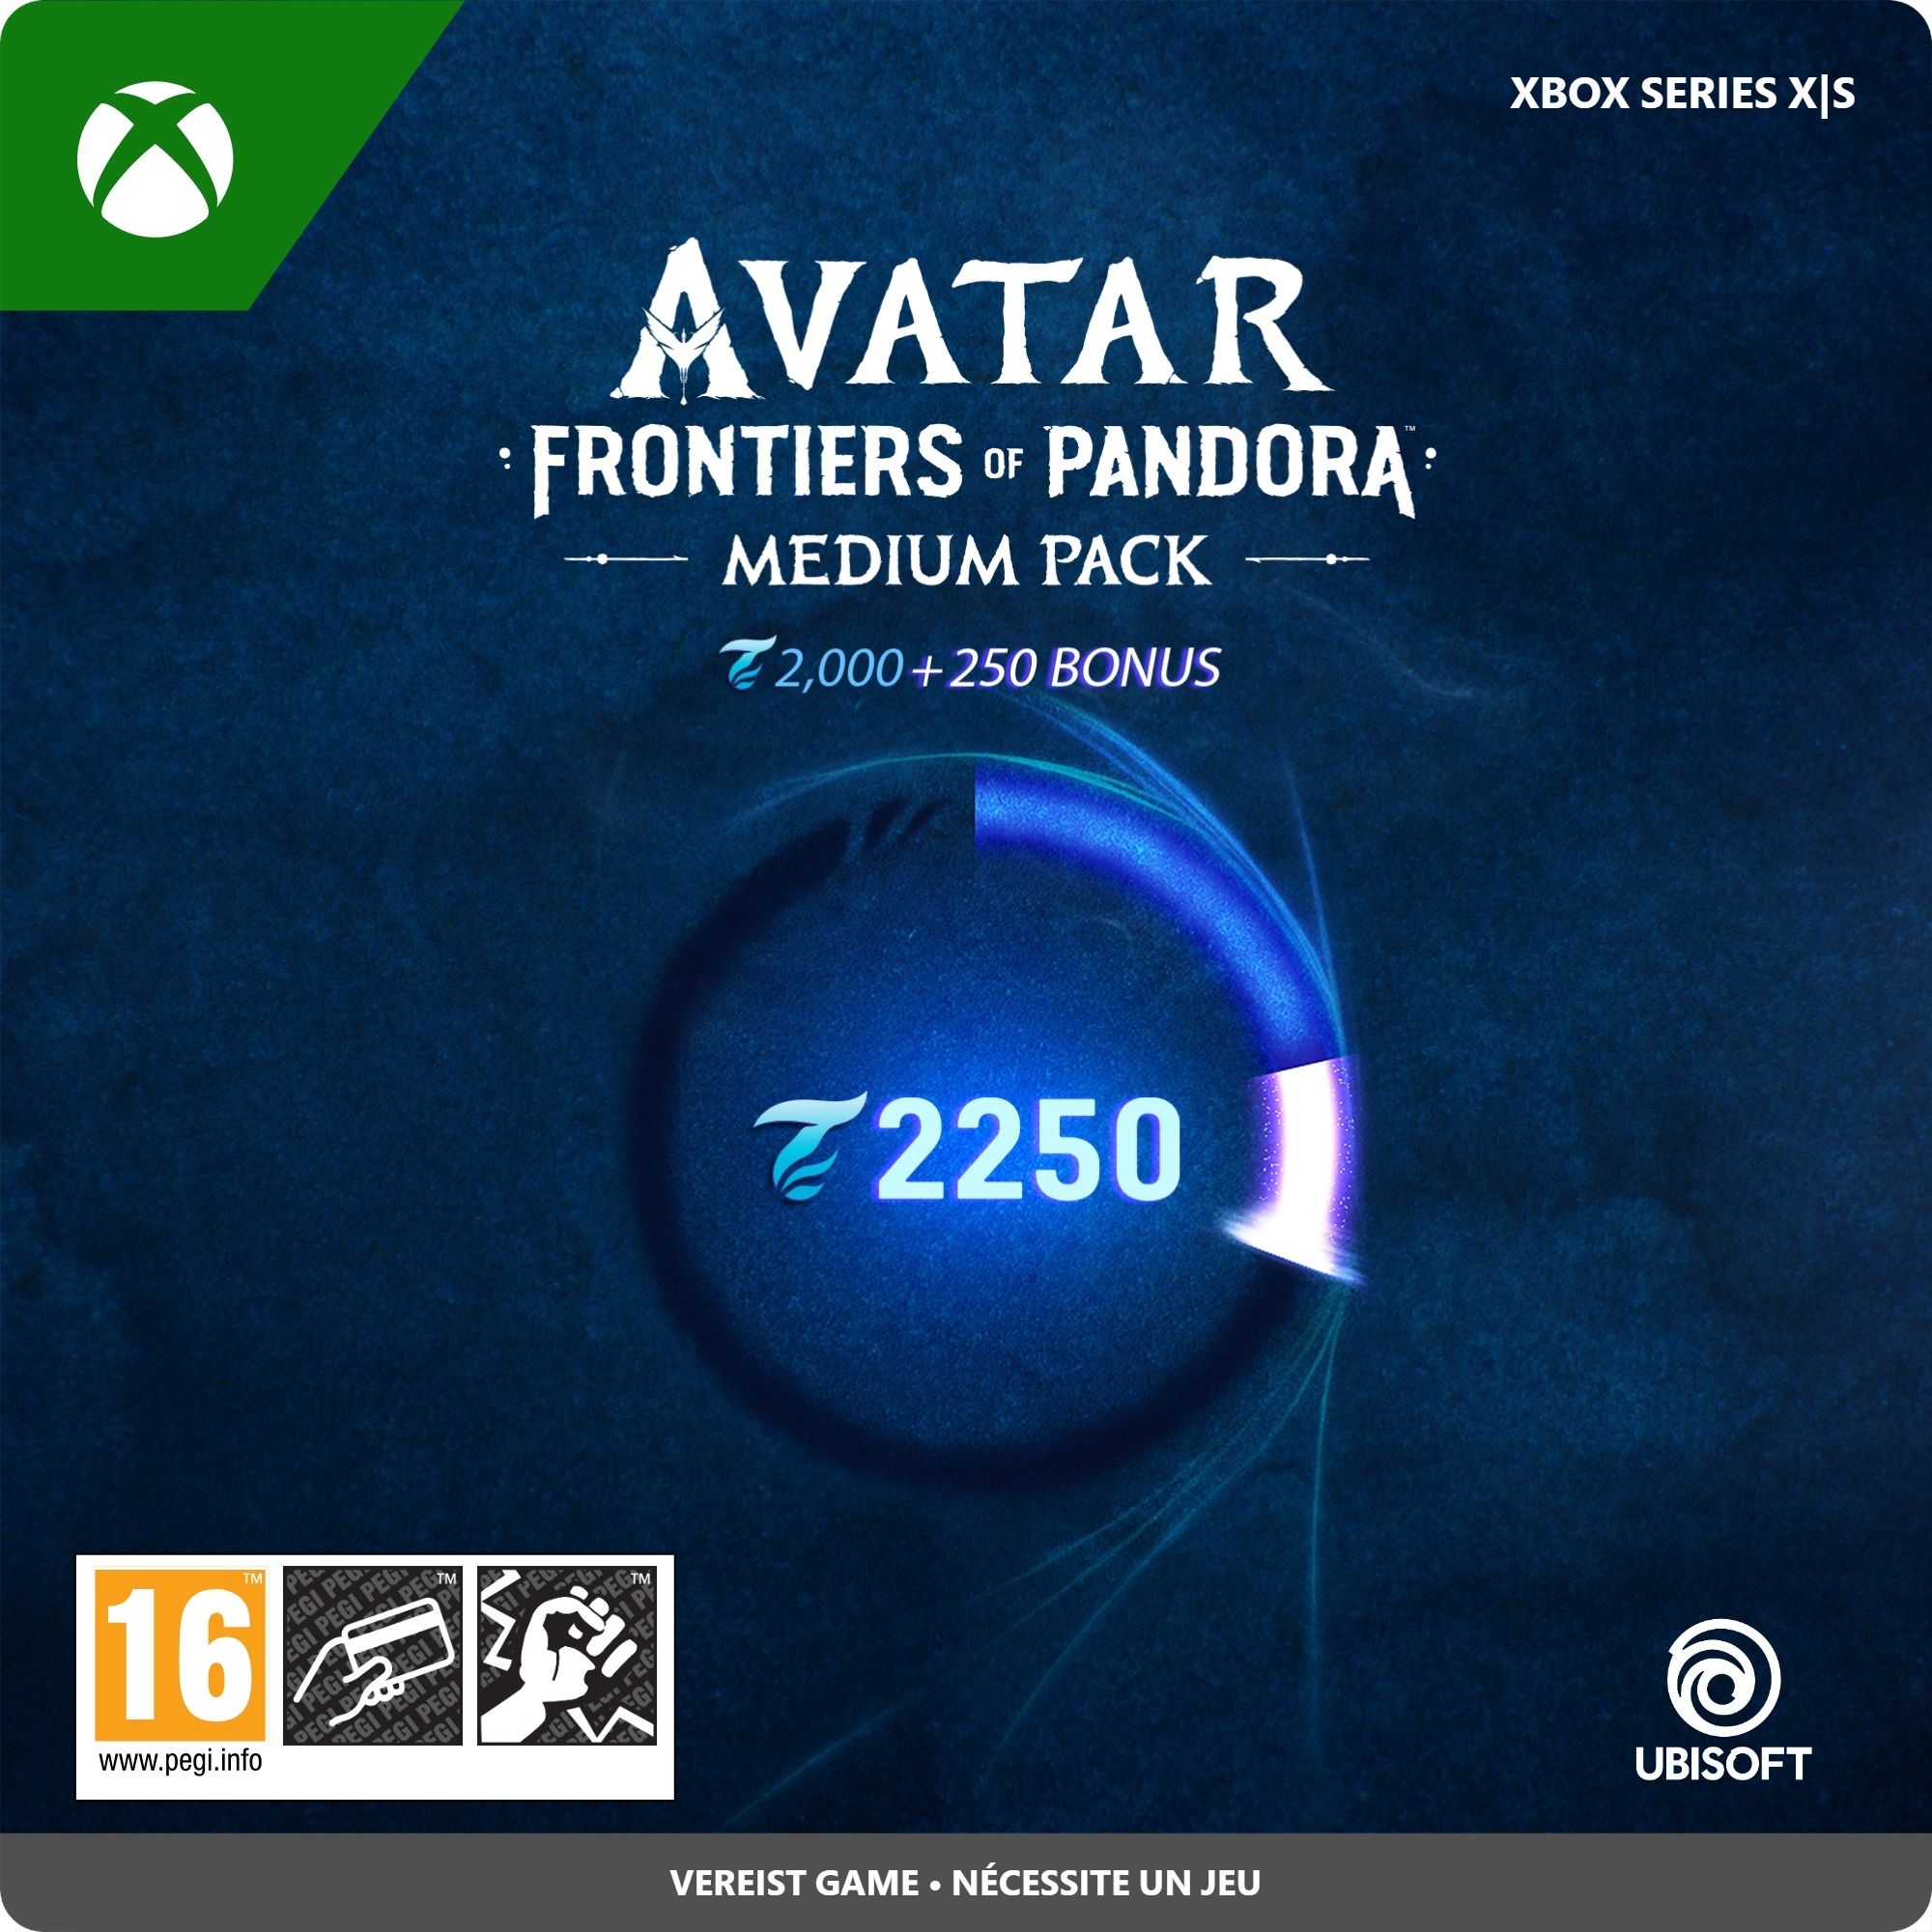 2.250 Xbox Avatar: Frontiers of Pandora Medium Pack Tokens